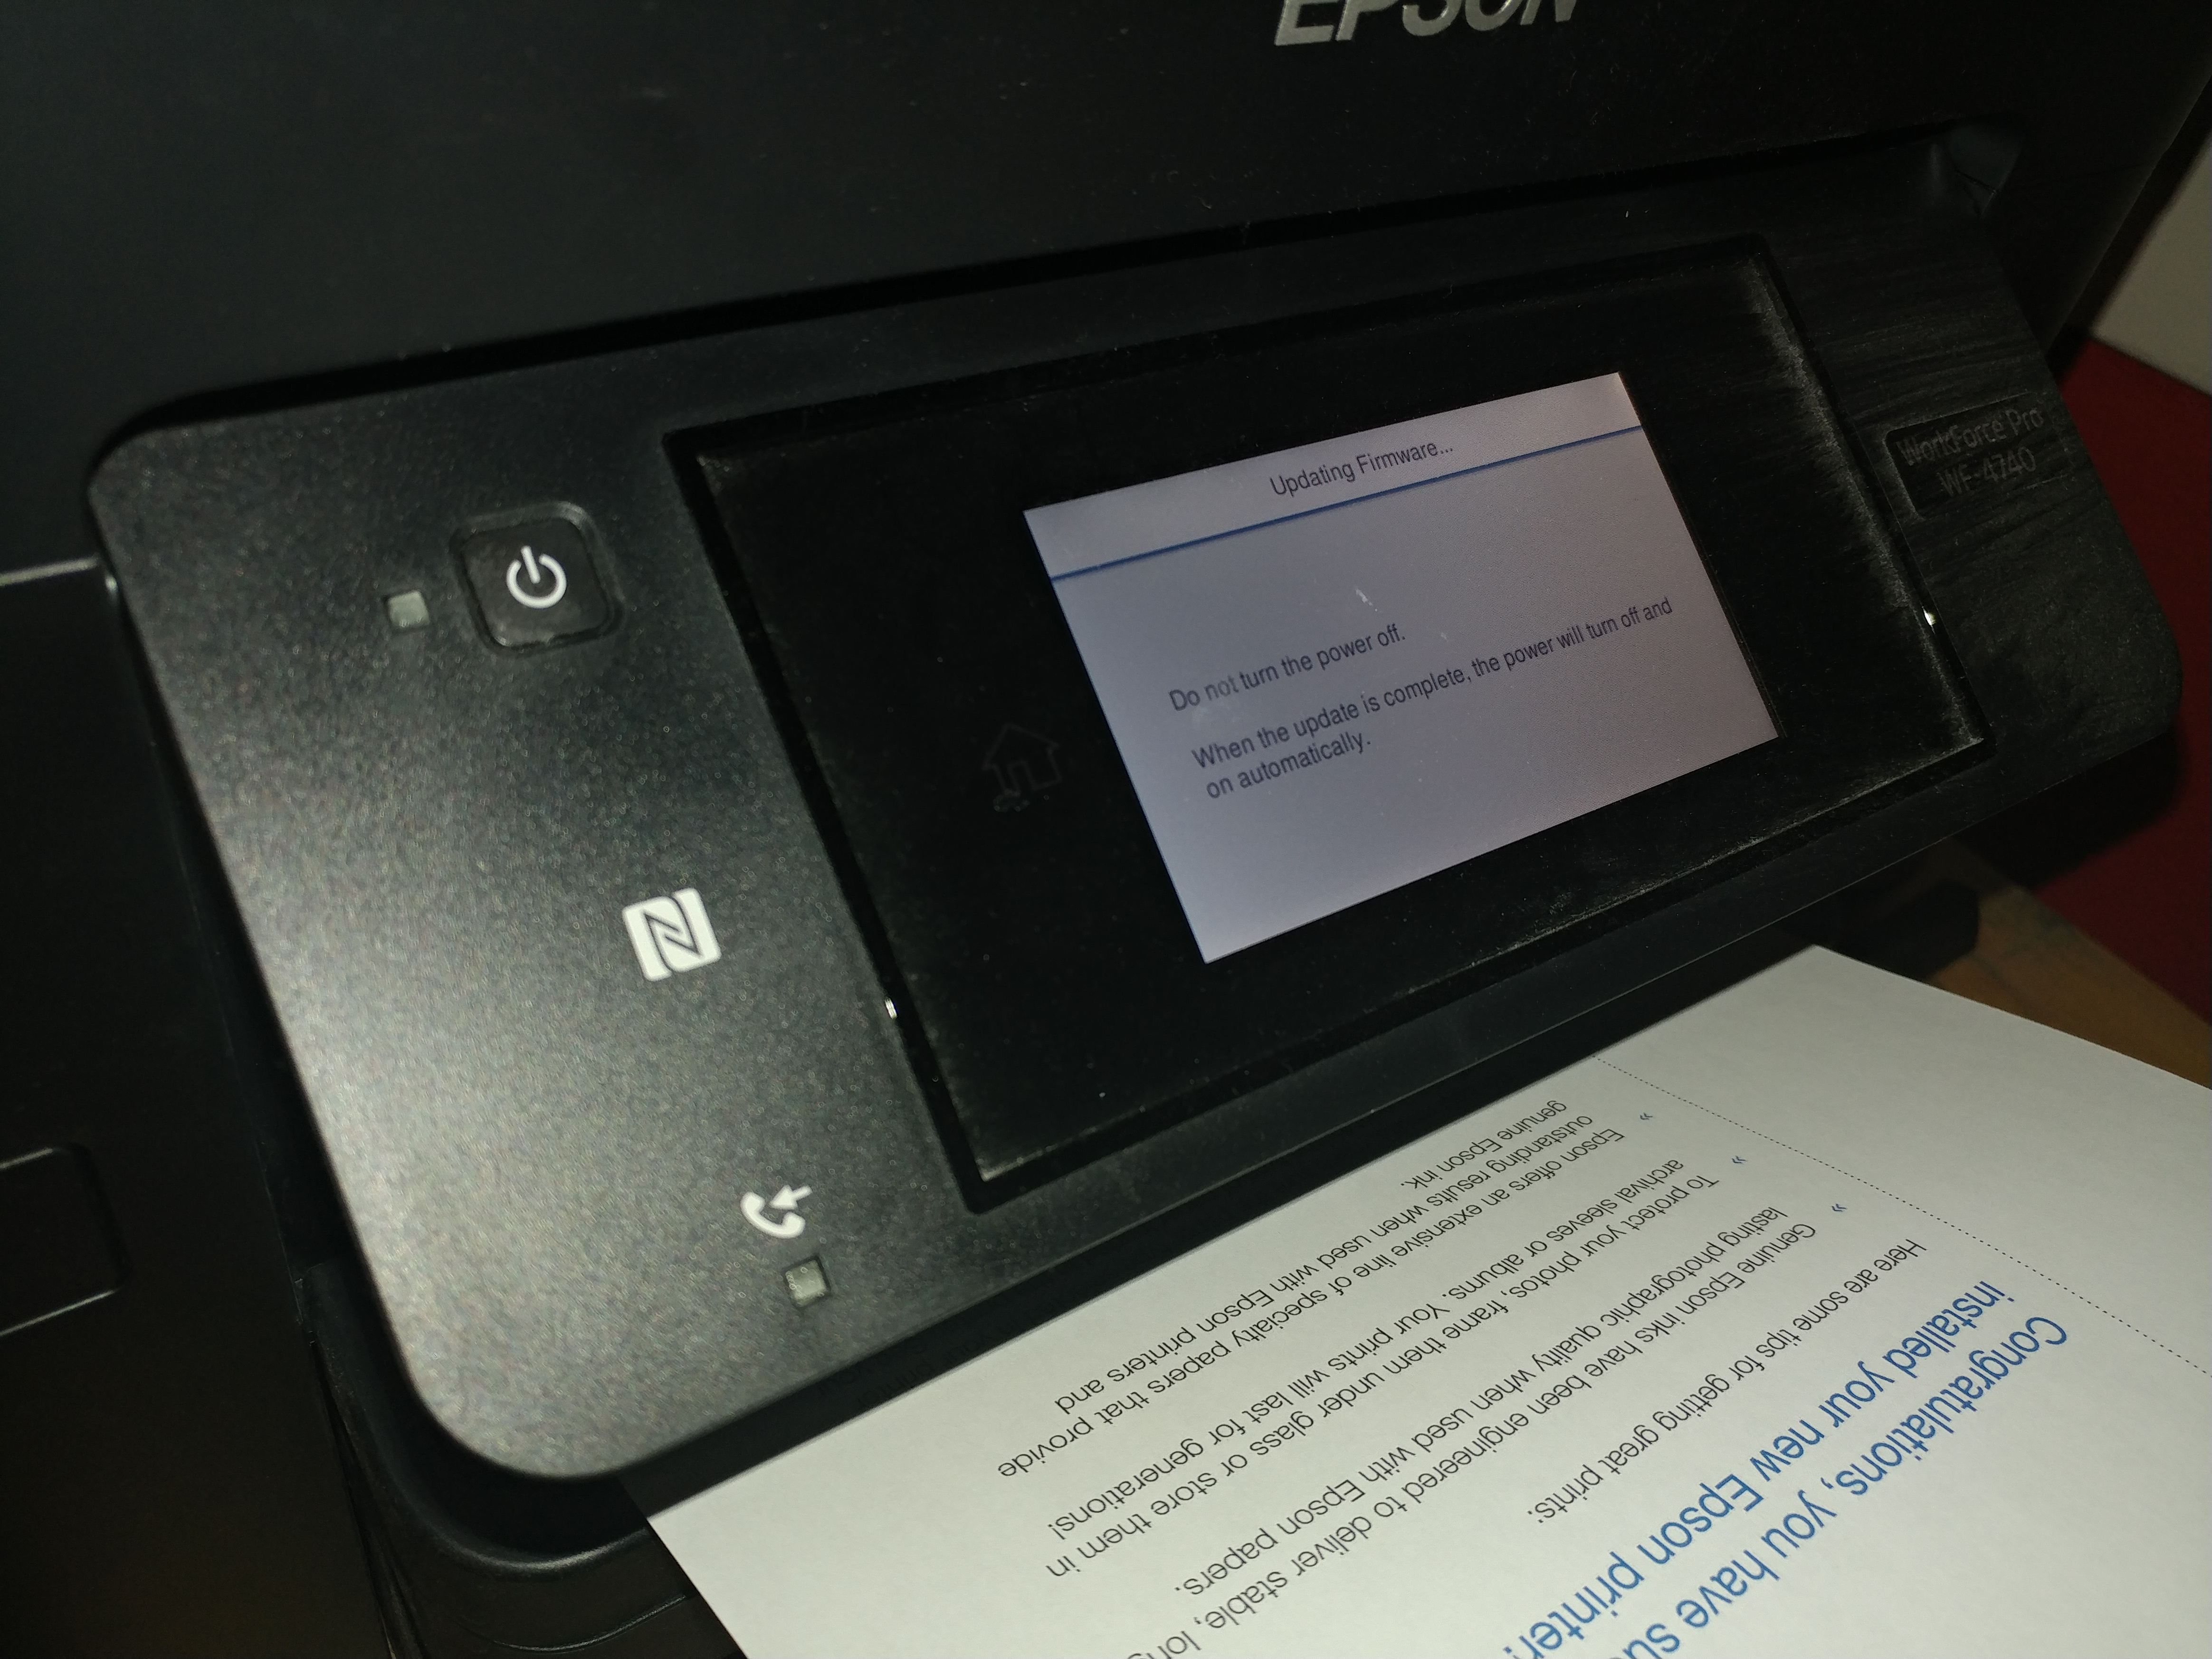 updating Espon printer firmware